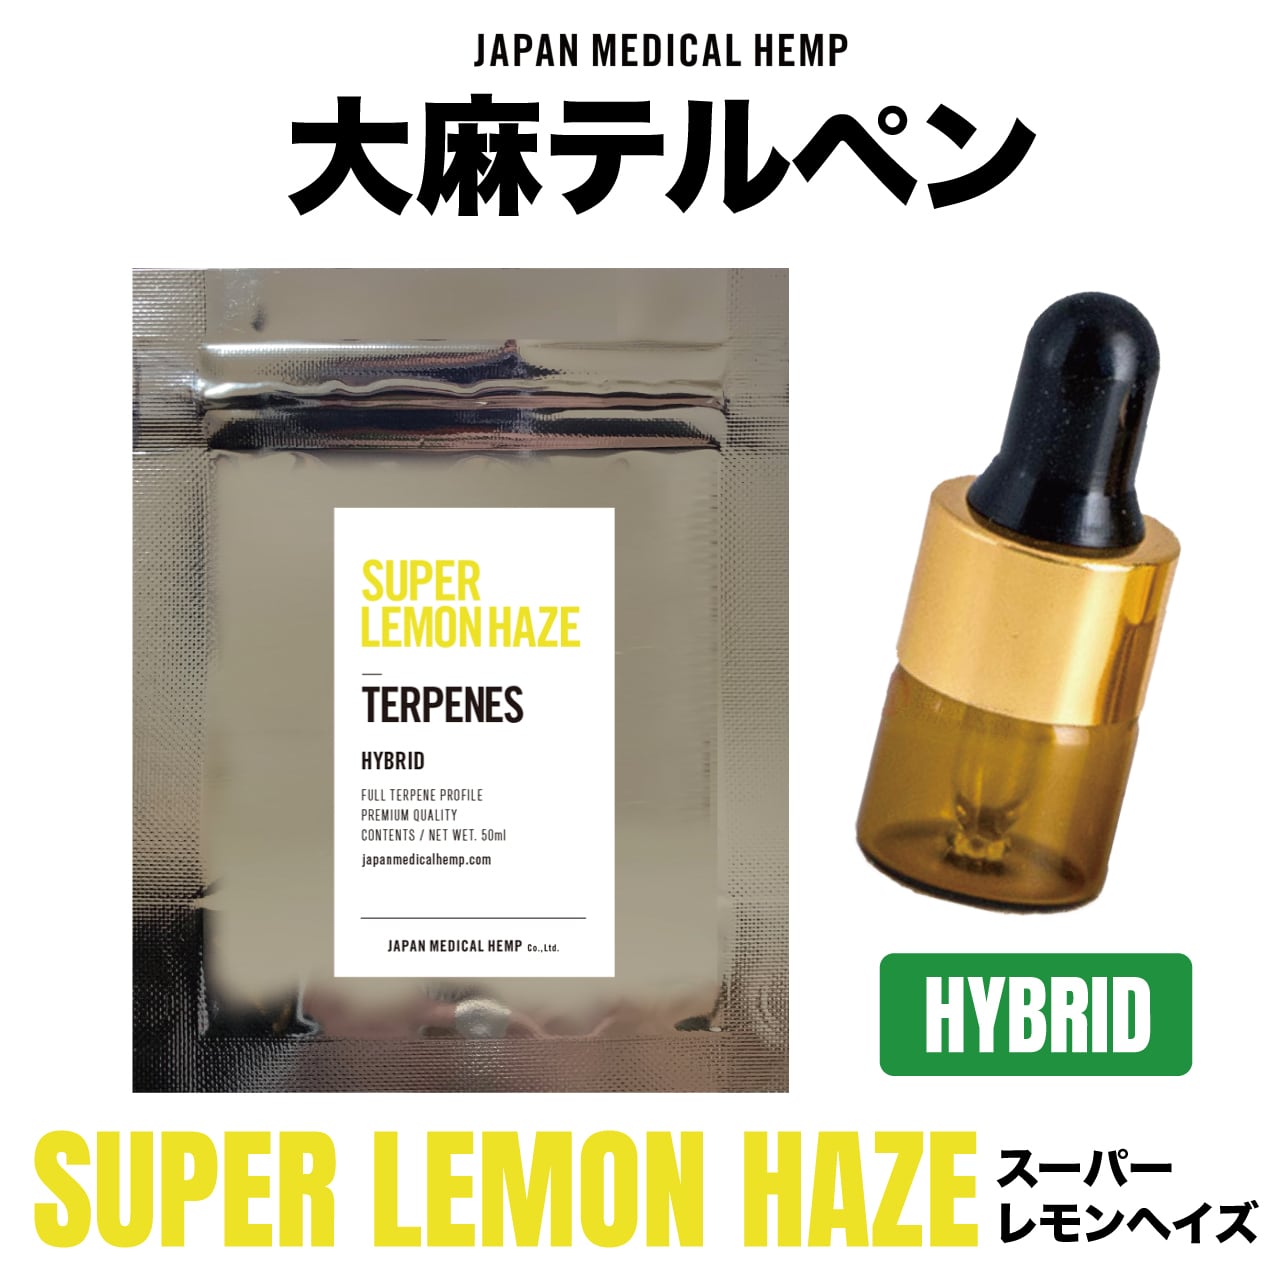 SUPER LEMON HAZE TERPENES (Hybrid) - JAPAN MEDICAL HEMP